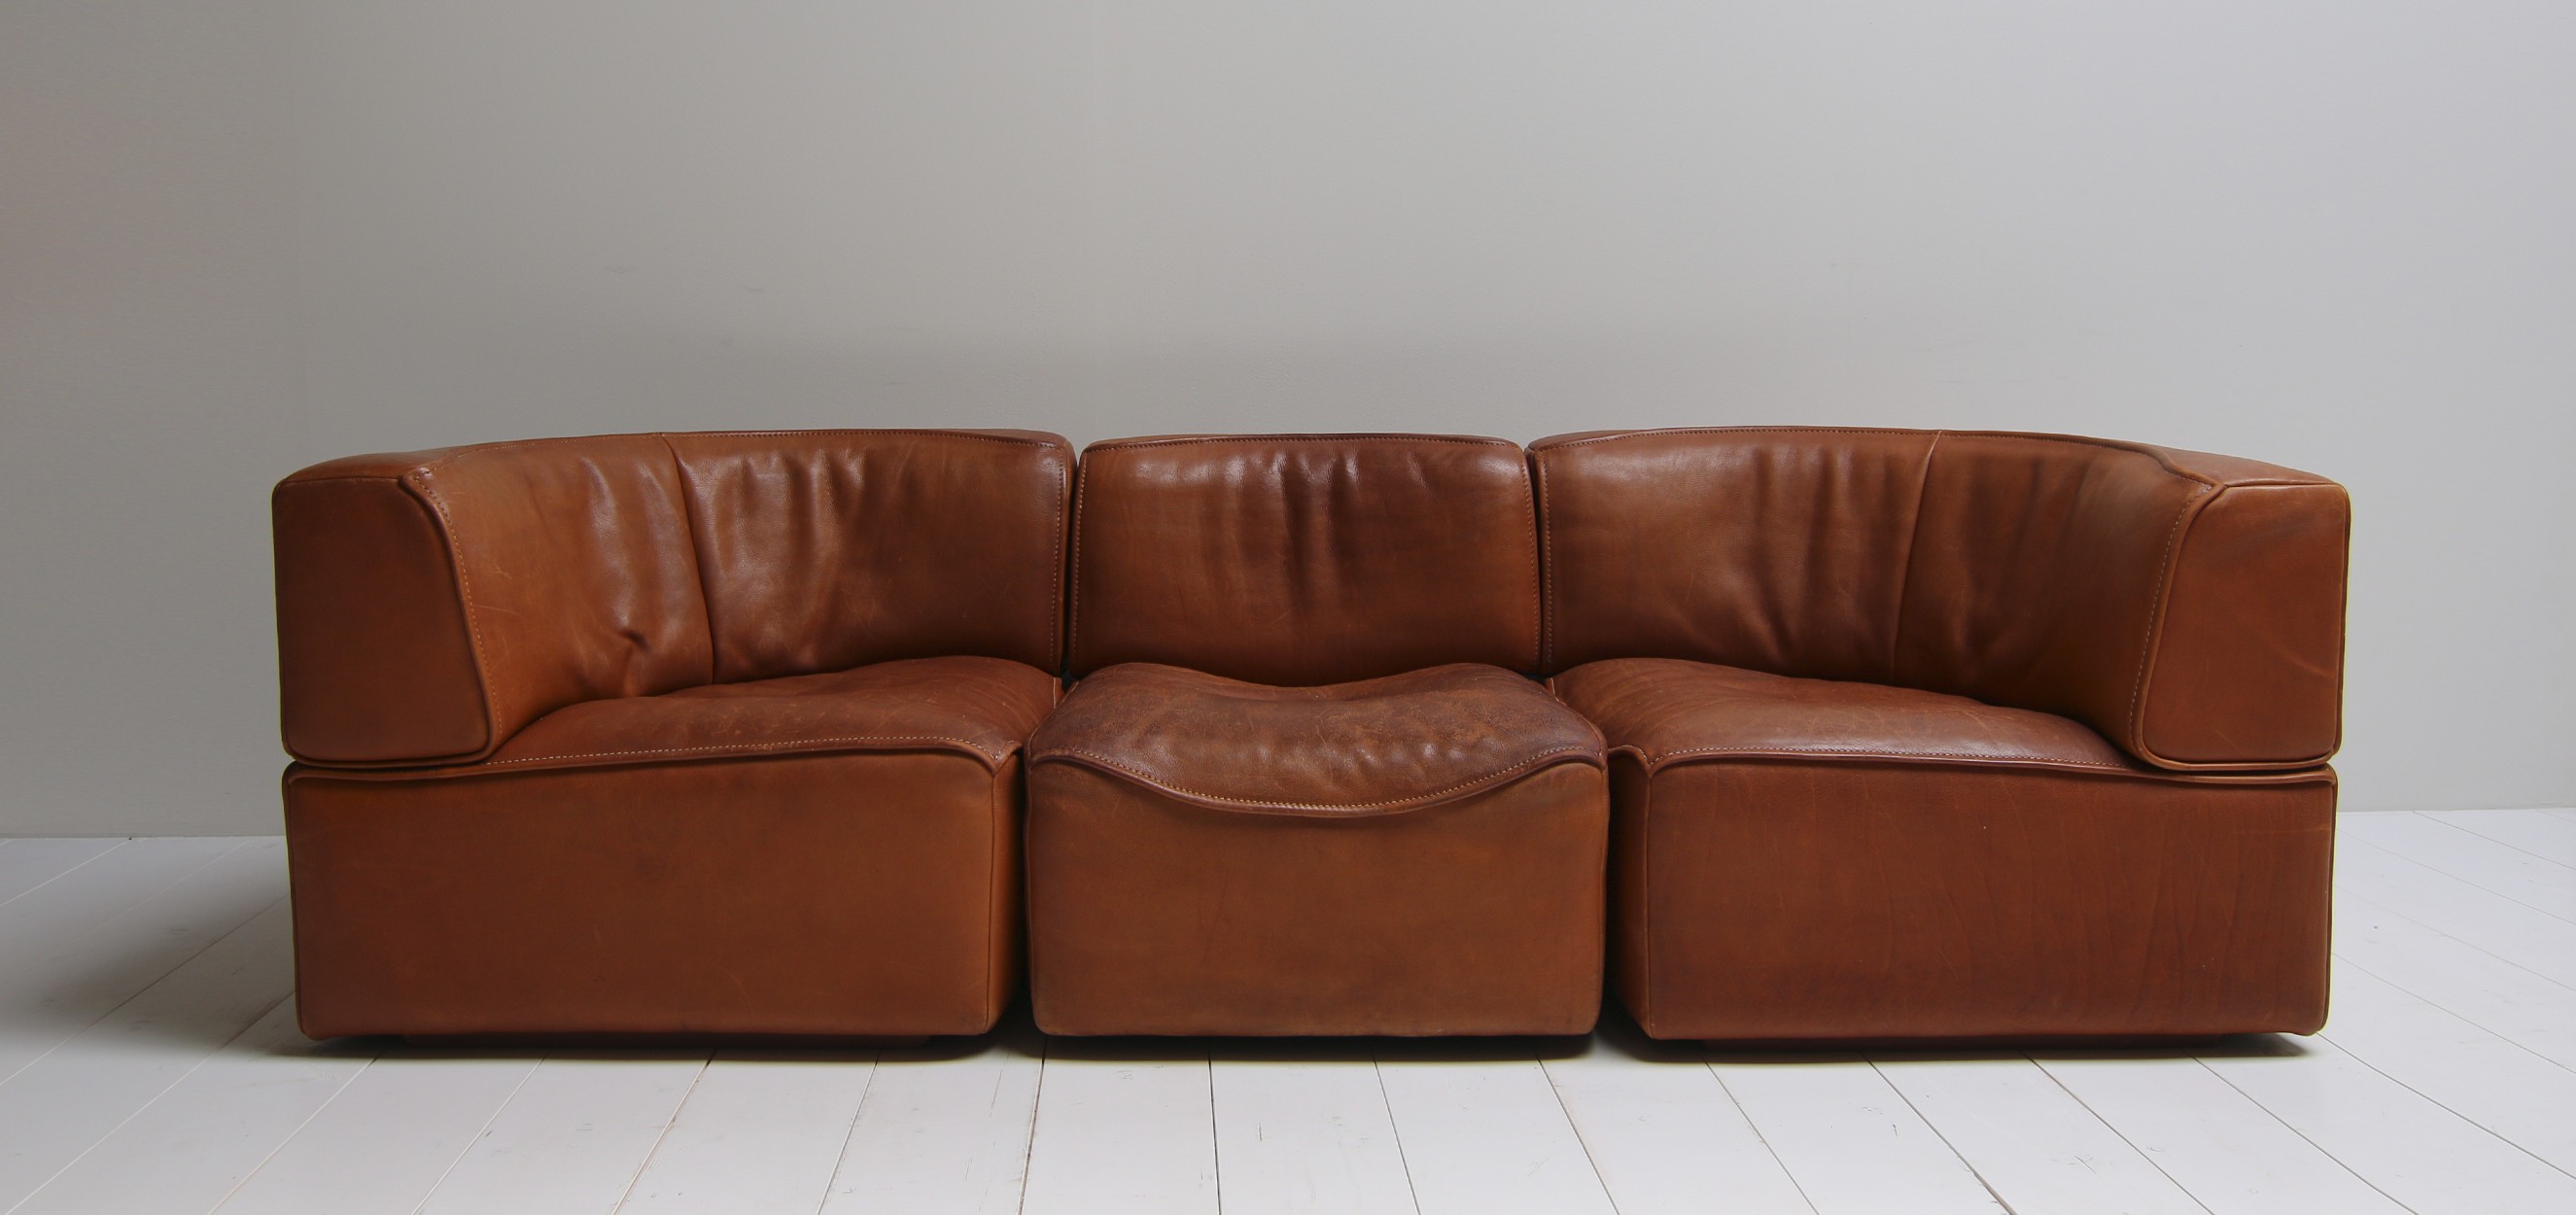 De Sede DS15 saddle leather sofa in cognac color 1970s